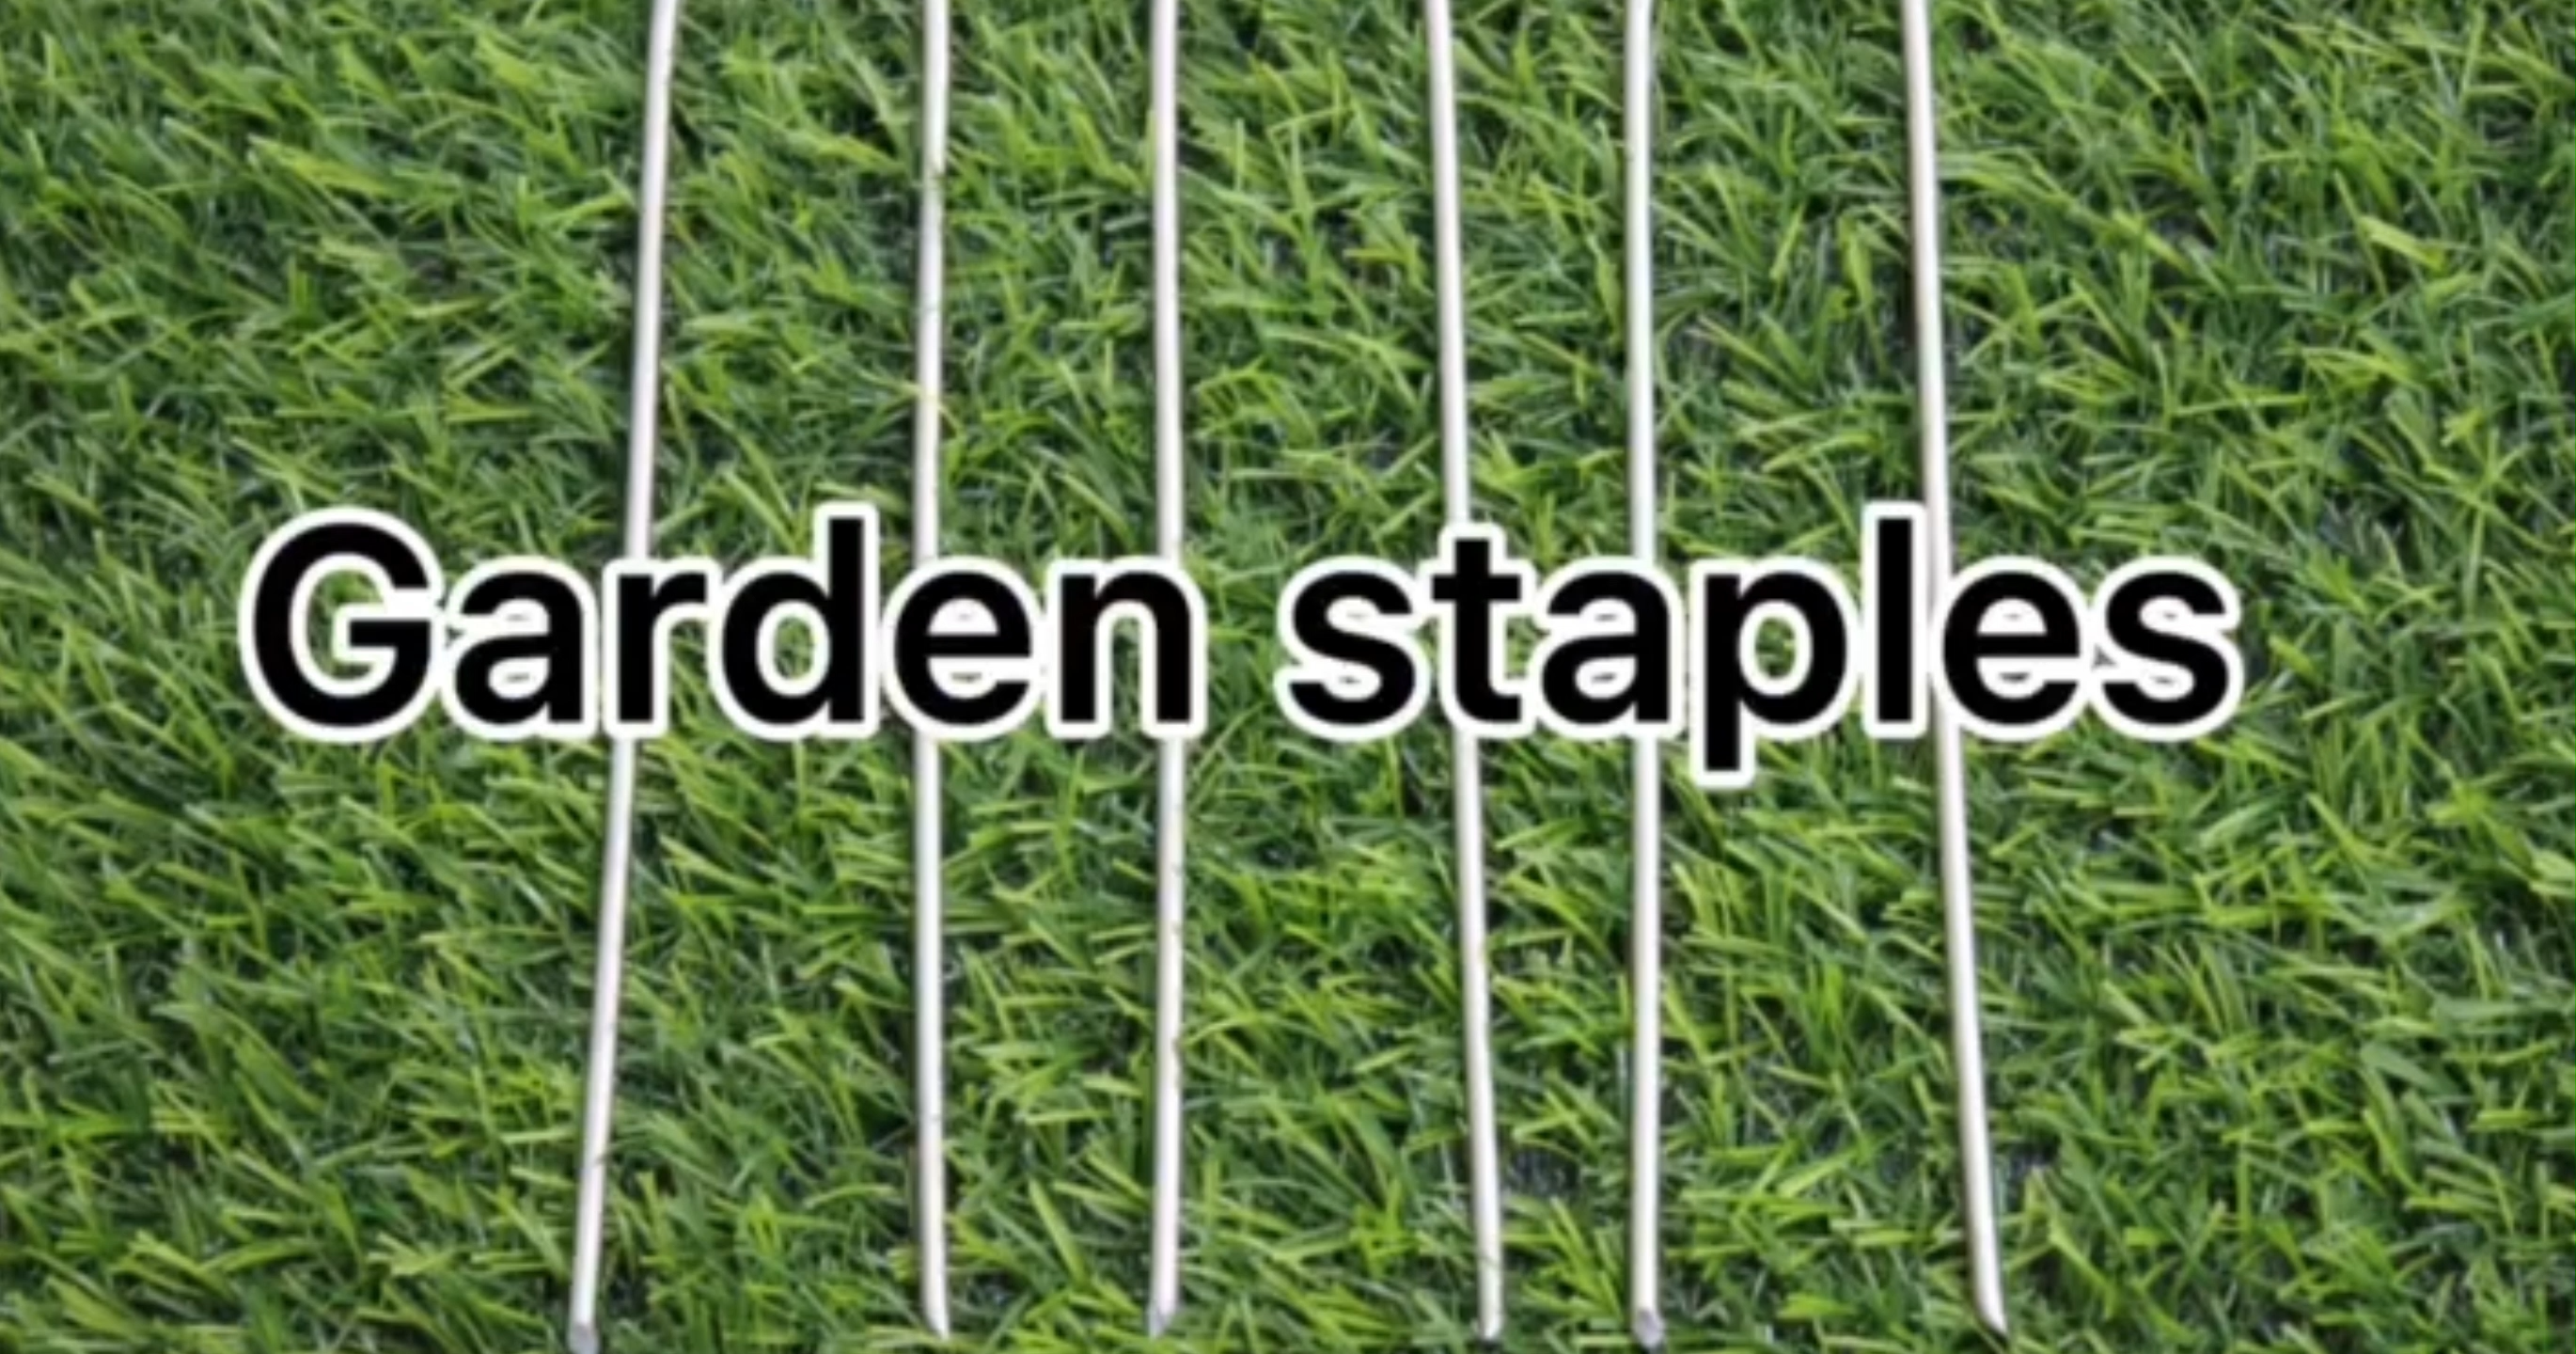 Landscaping Fabric u steel shaped nail ground Galvanized Garden Staples1